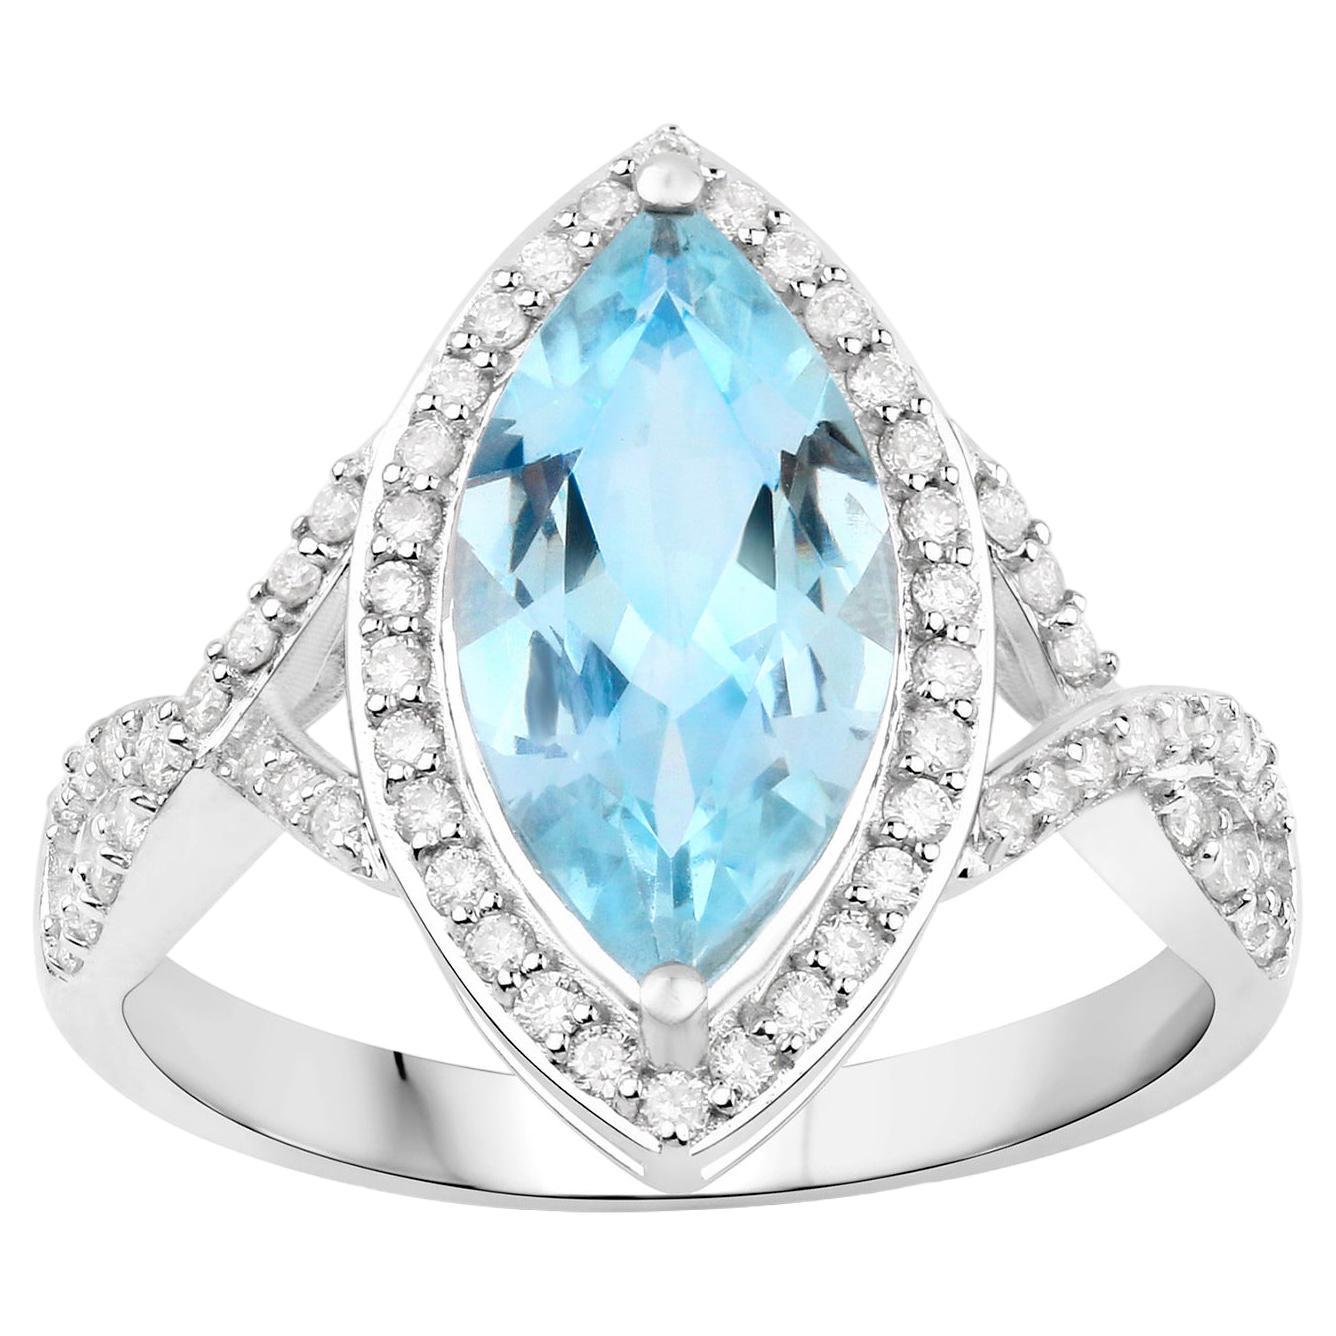 Aquamarine Ring With Diamonds 2.24 Carats 14K White Gold